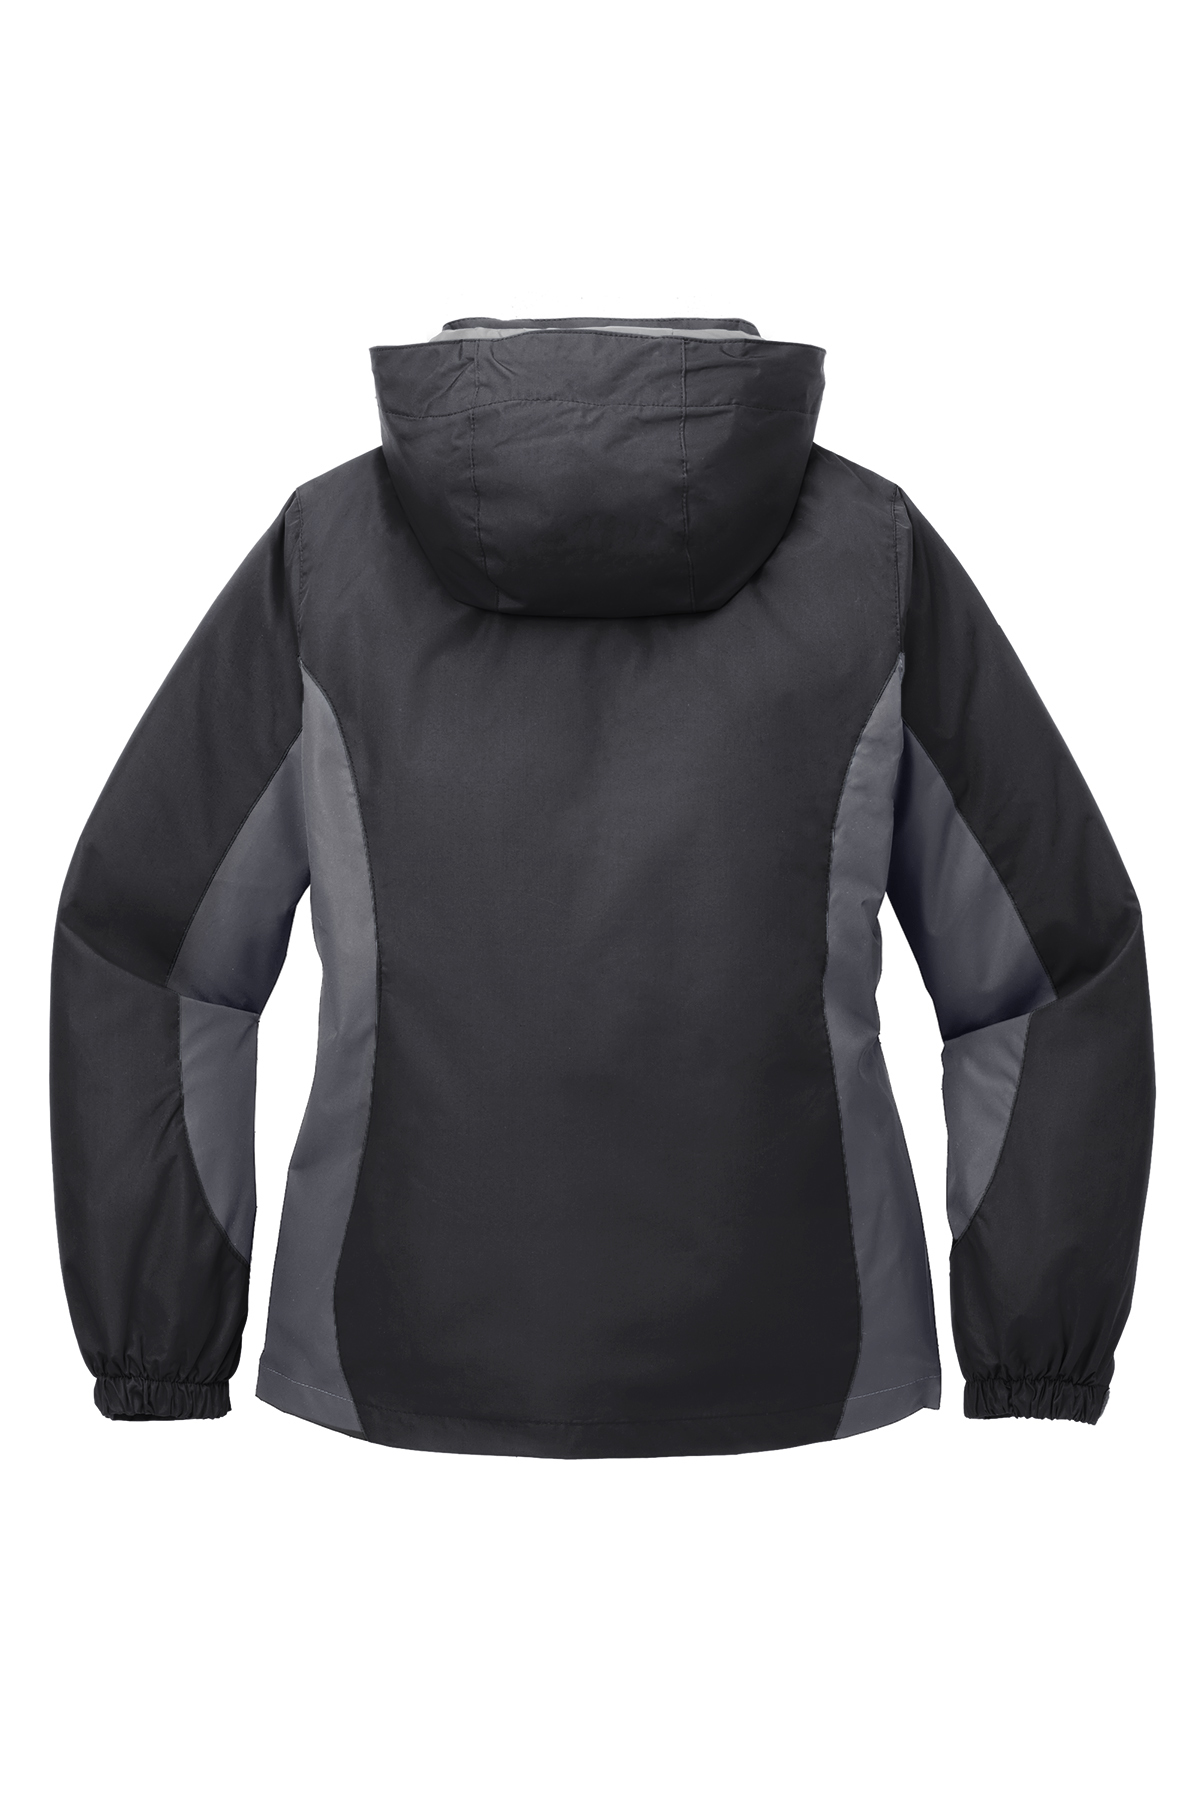 | Colorblock SanMar Port Product 3-in-1 Jacket Authority Ladies |